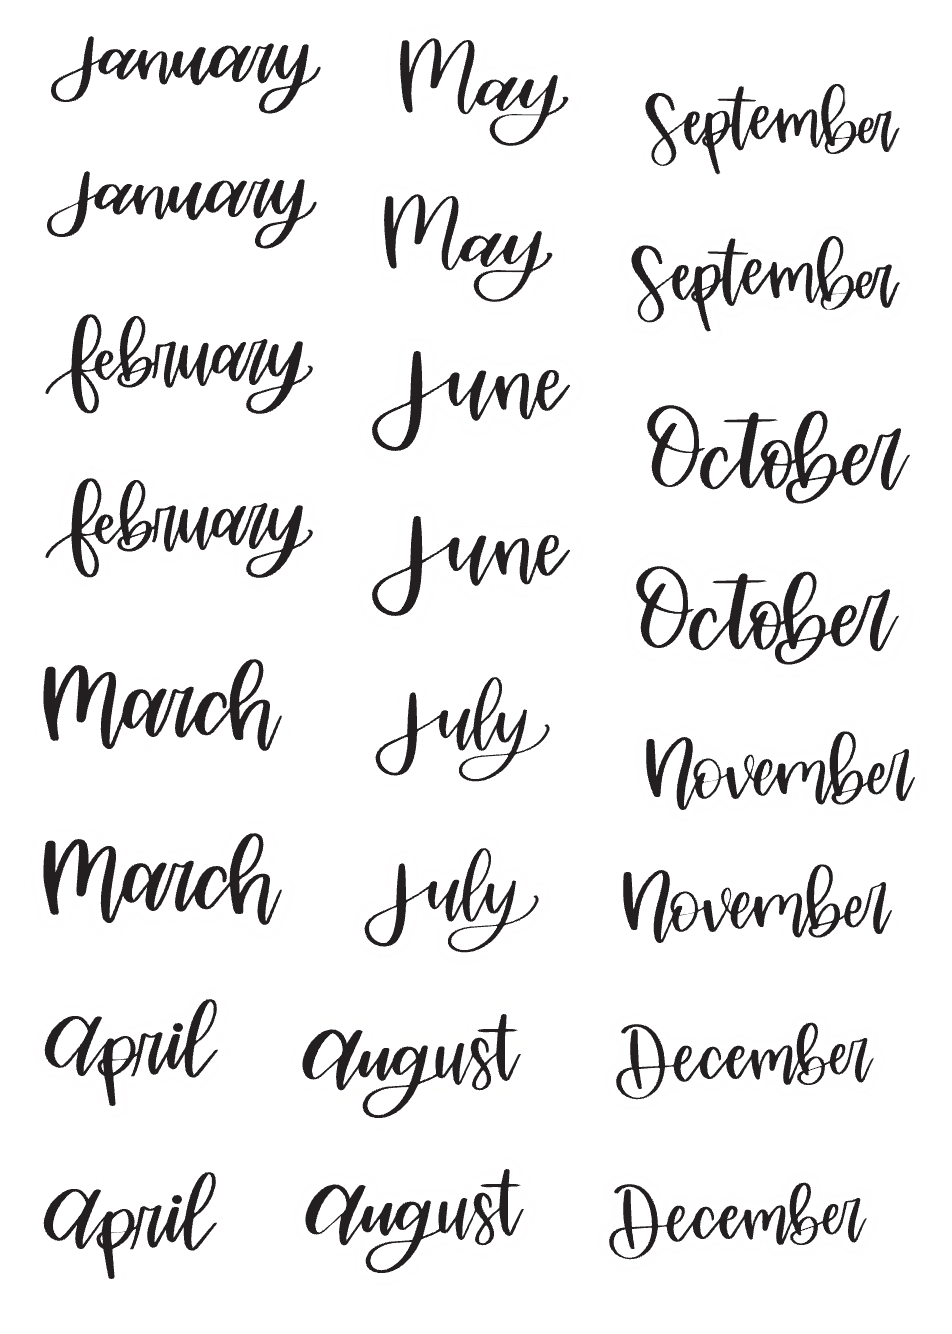 Months of the Year Sticker Sheet